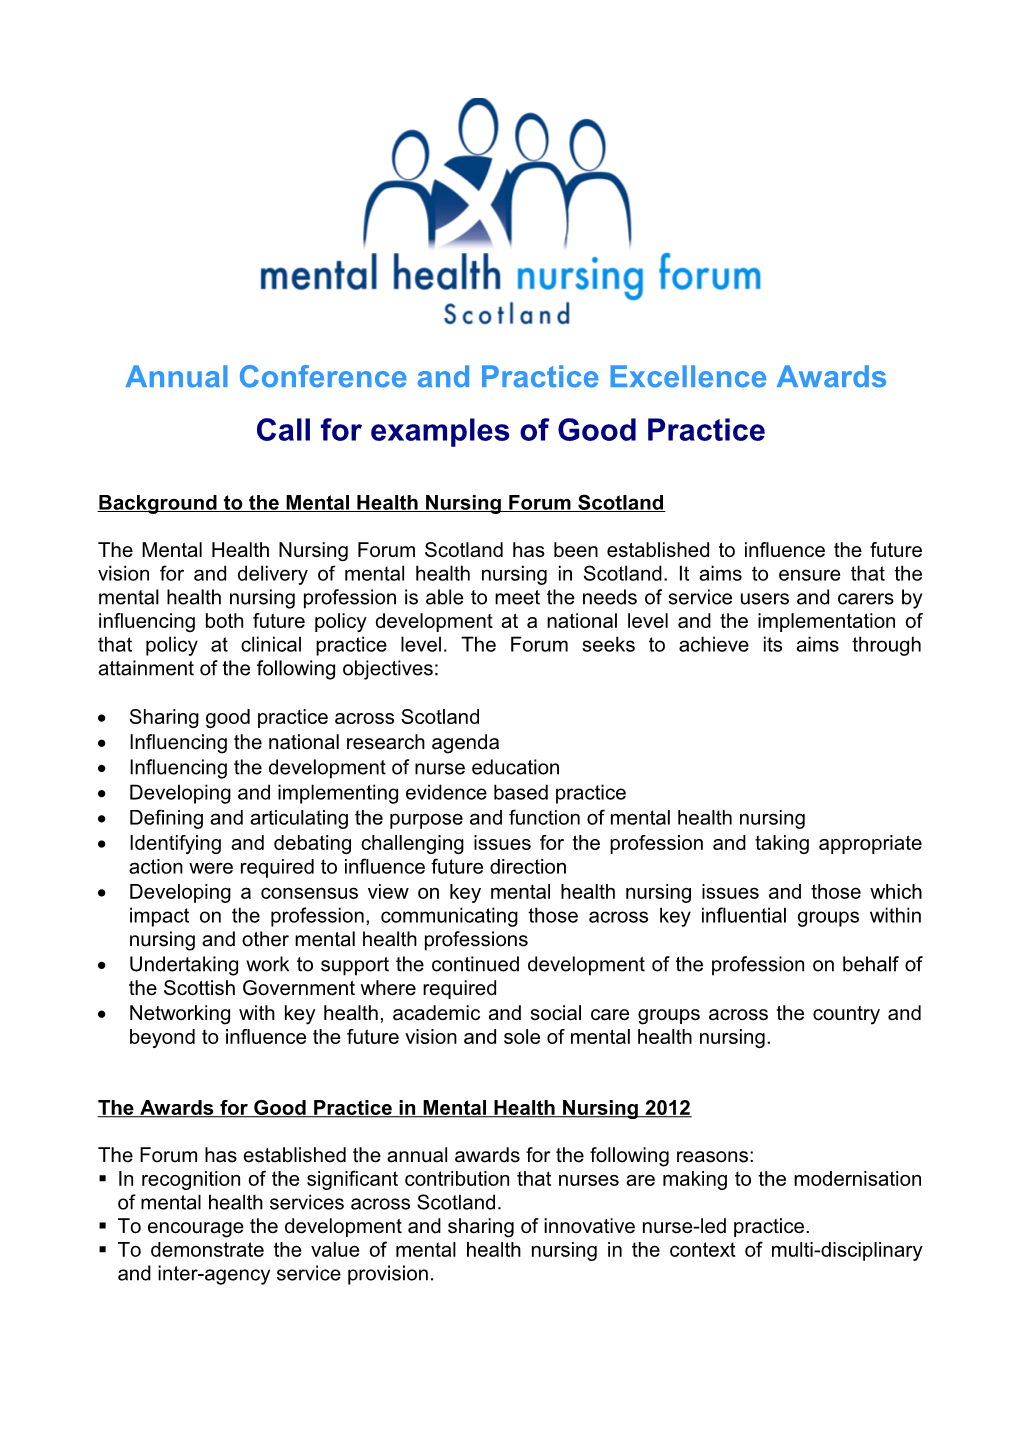 The Scottish Mental Health Nursing Forum